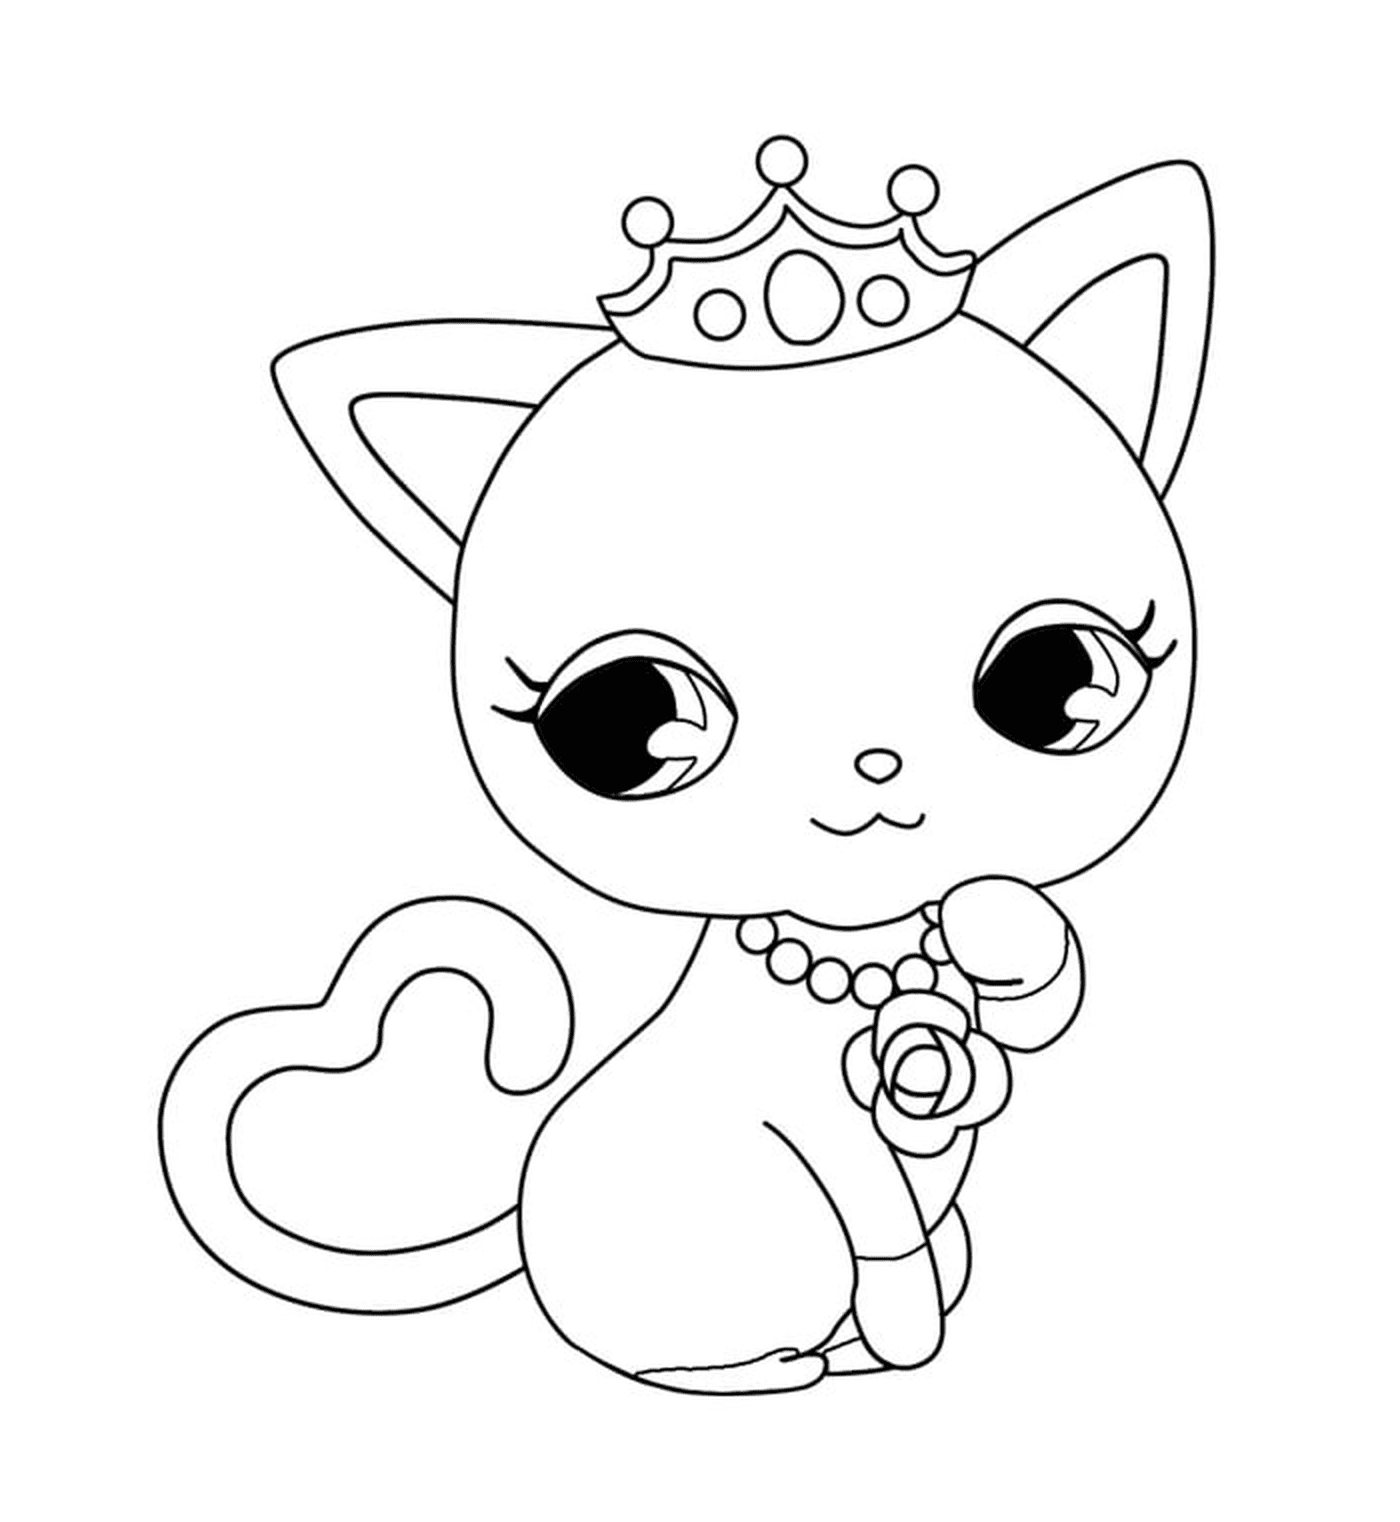  Кошка-принцесса с короной на голове 